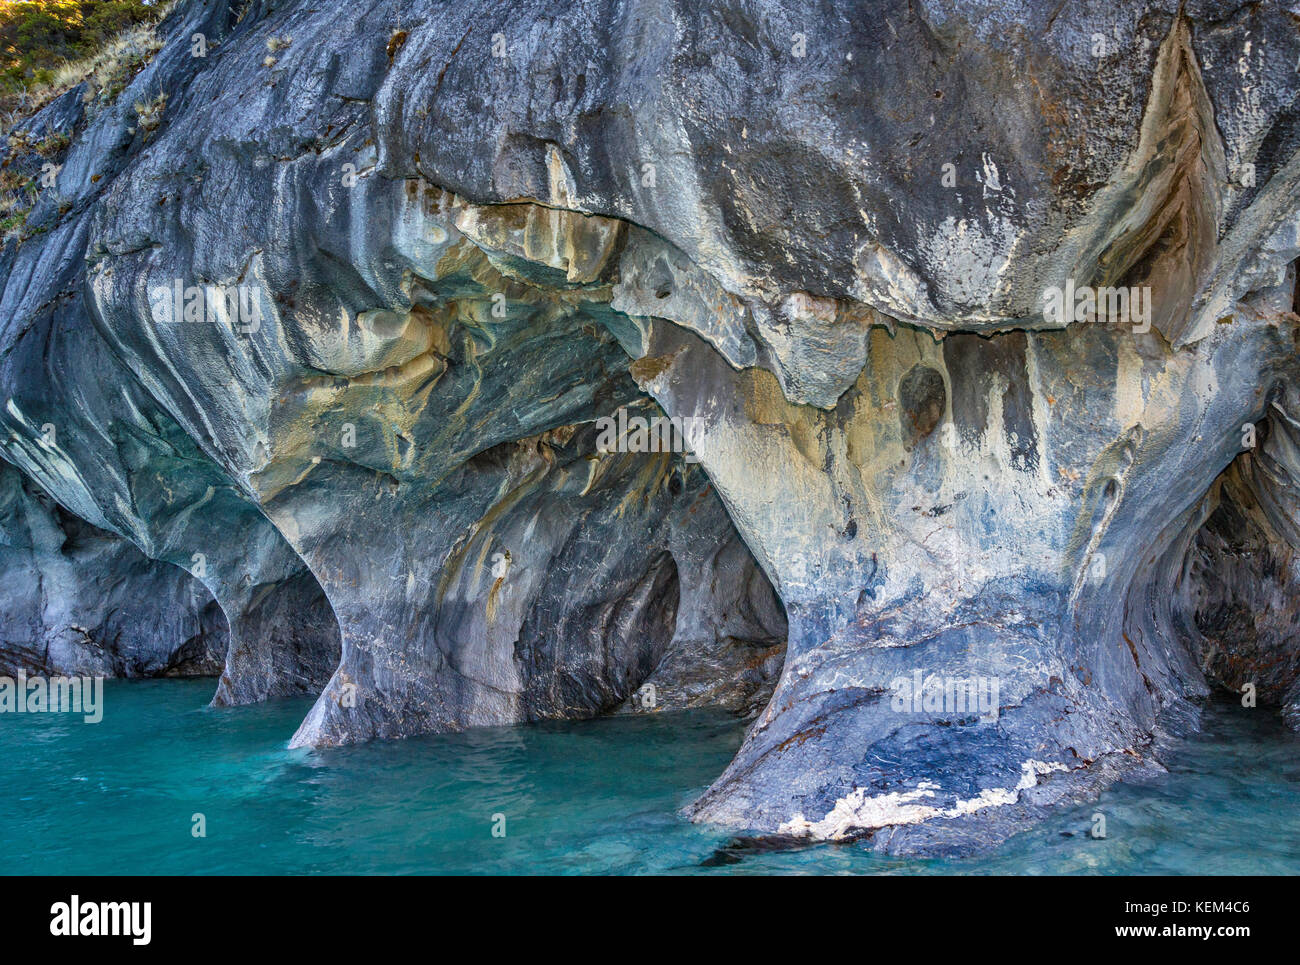 Marble Cathedral, Marble Caves, Cuevas de Marmol, Lago General Carrera, Patagonia, Chile Stock Photo